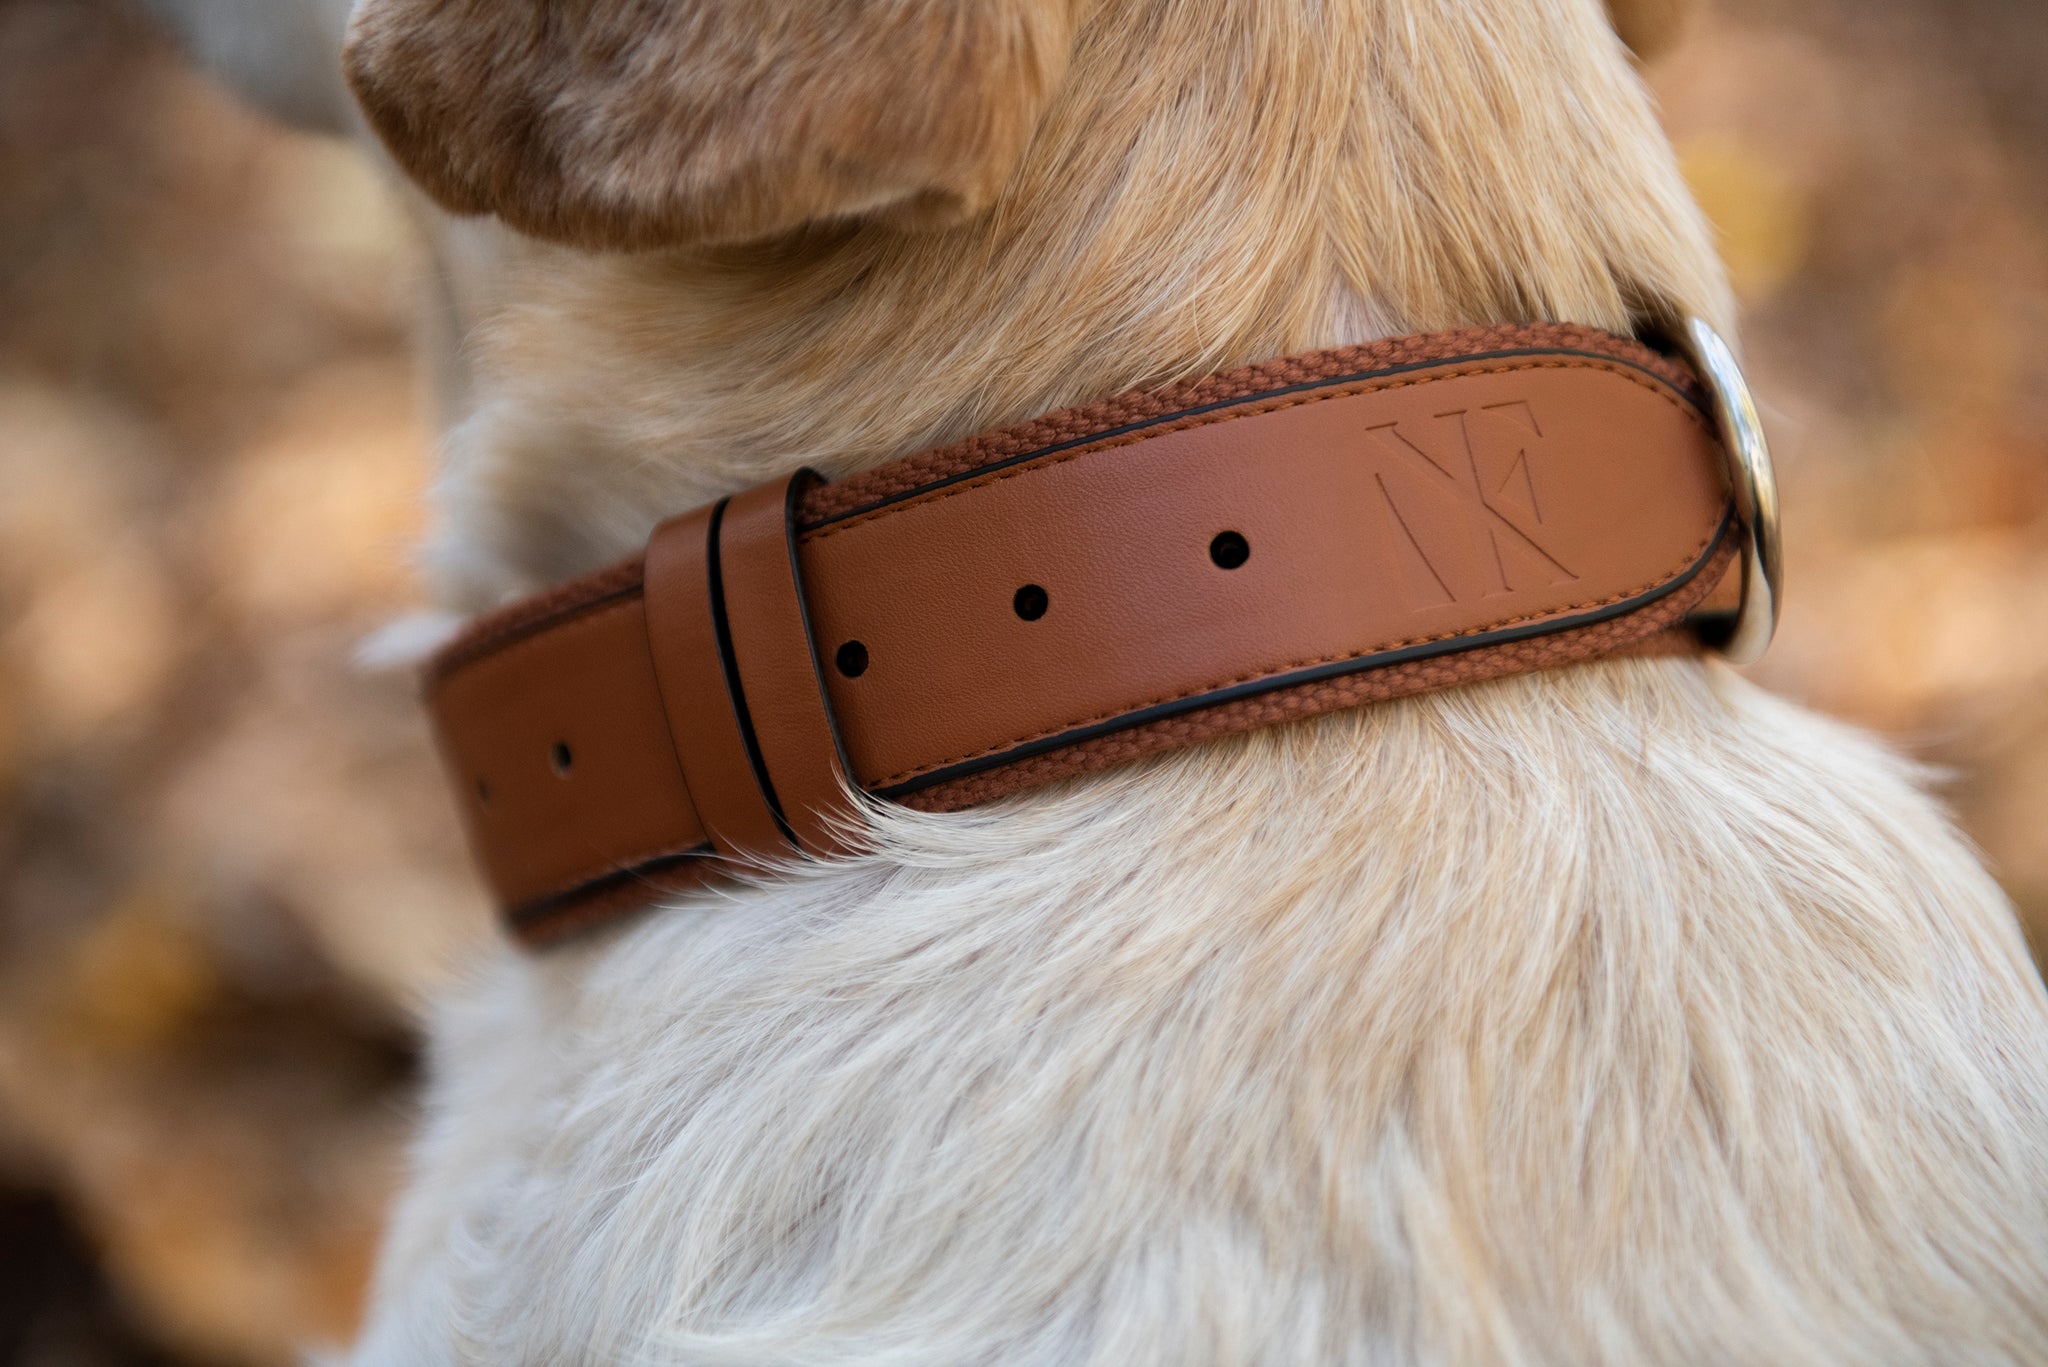 Louis Vuitton Dog Collar and Leash -  Australia